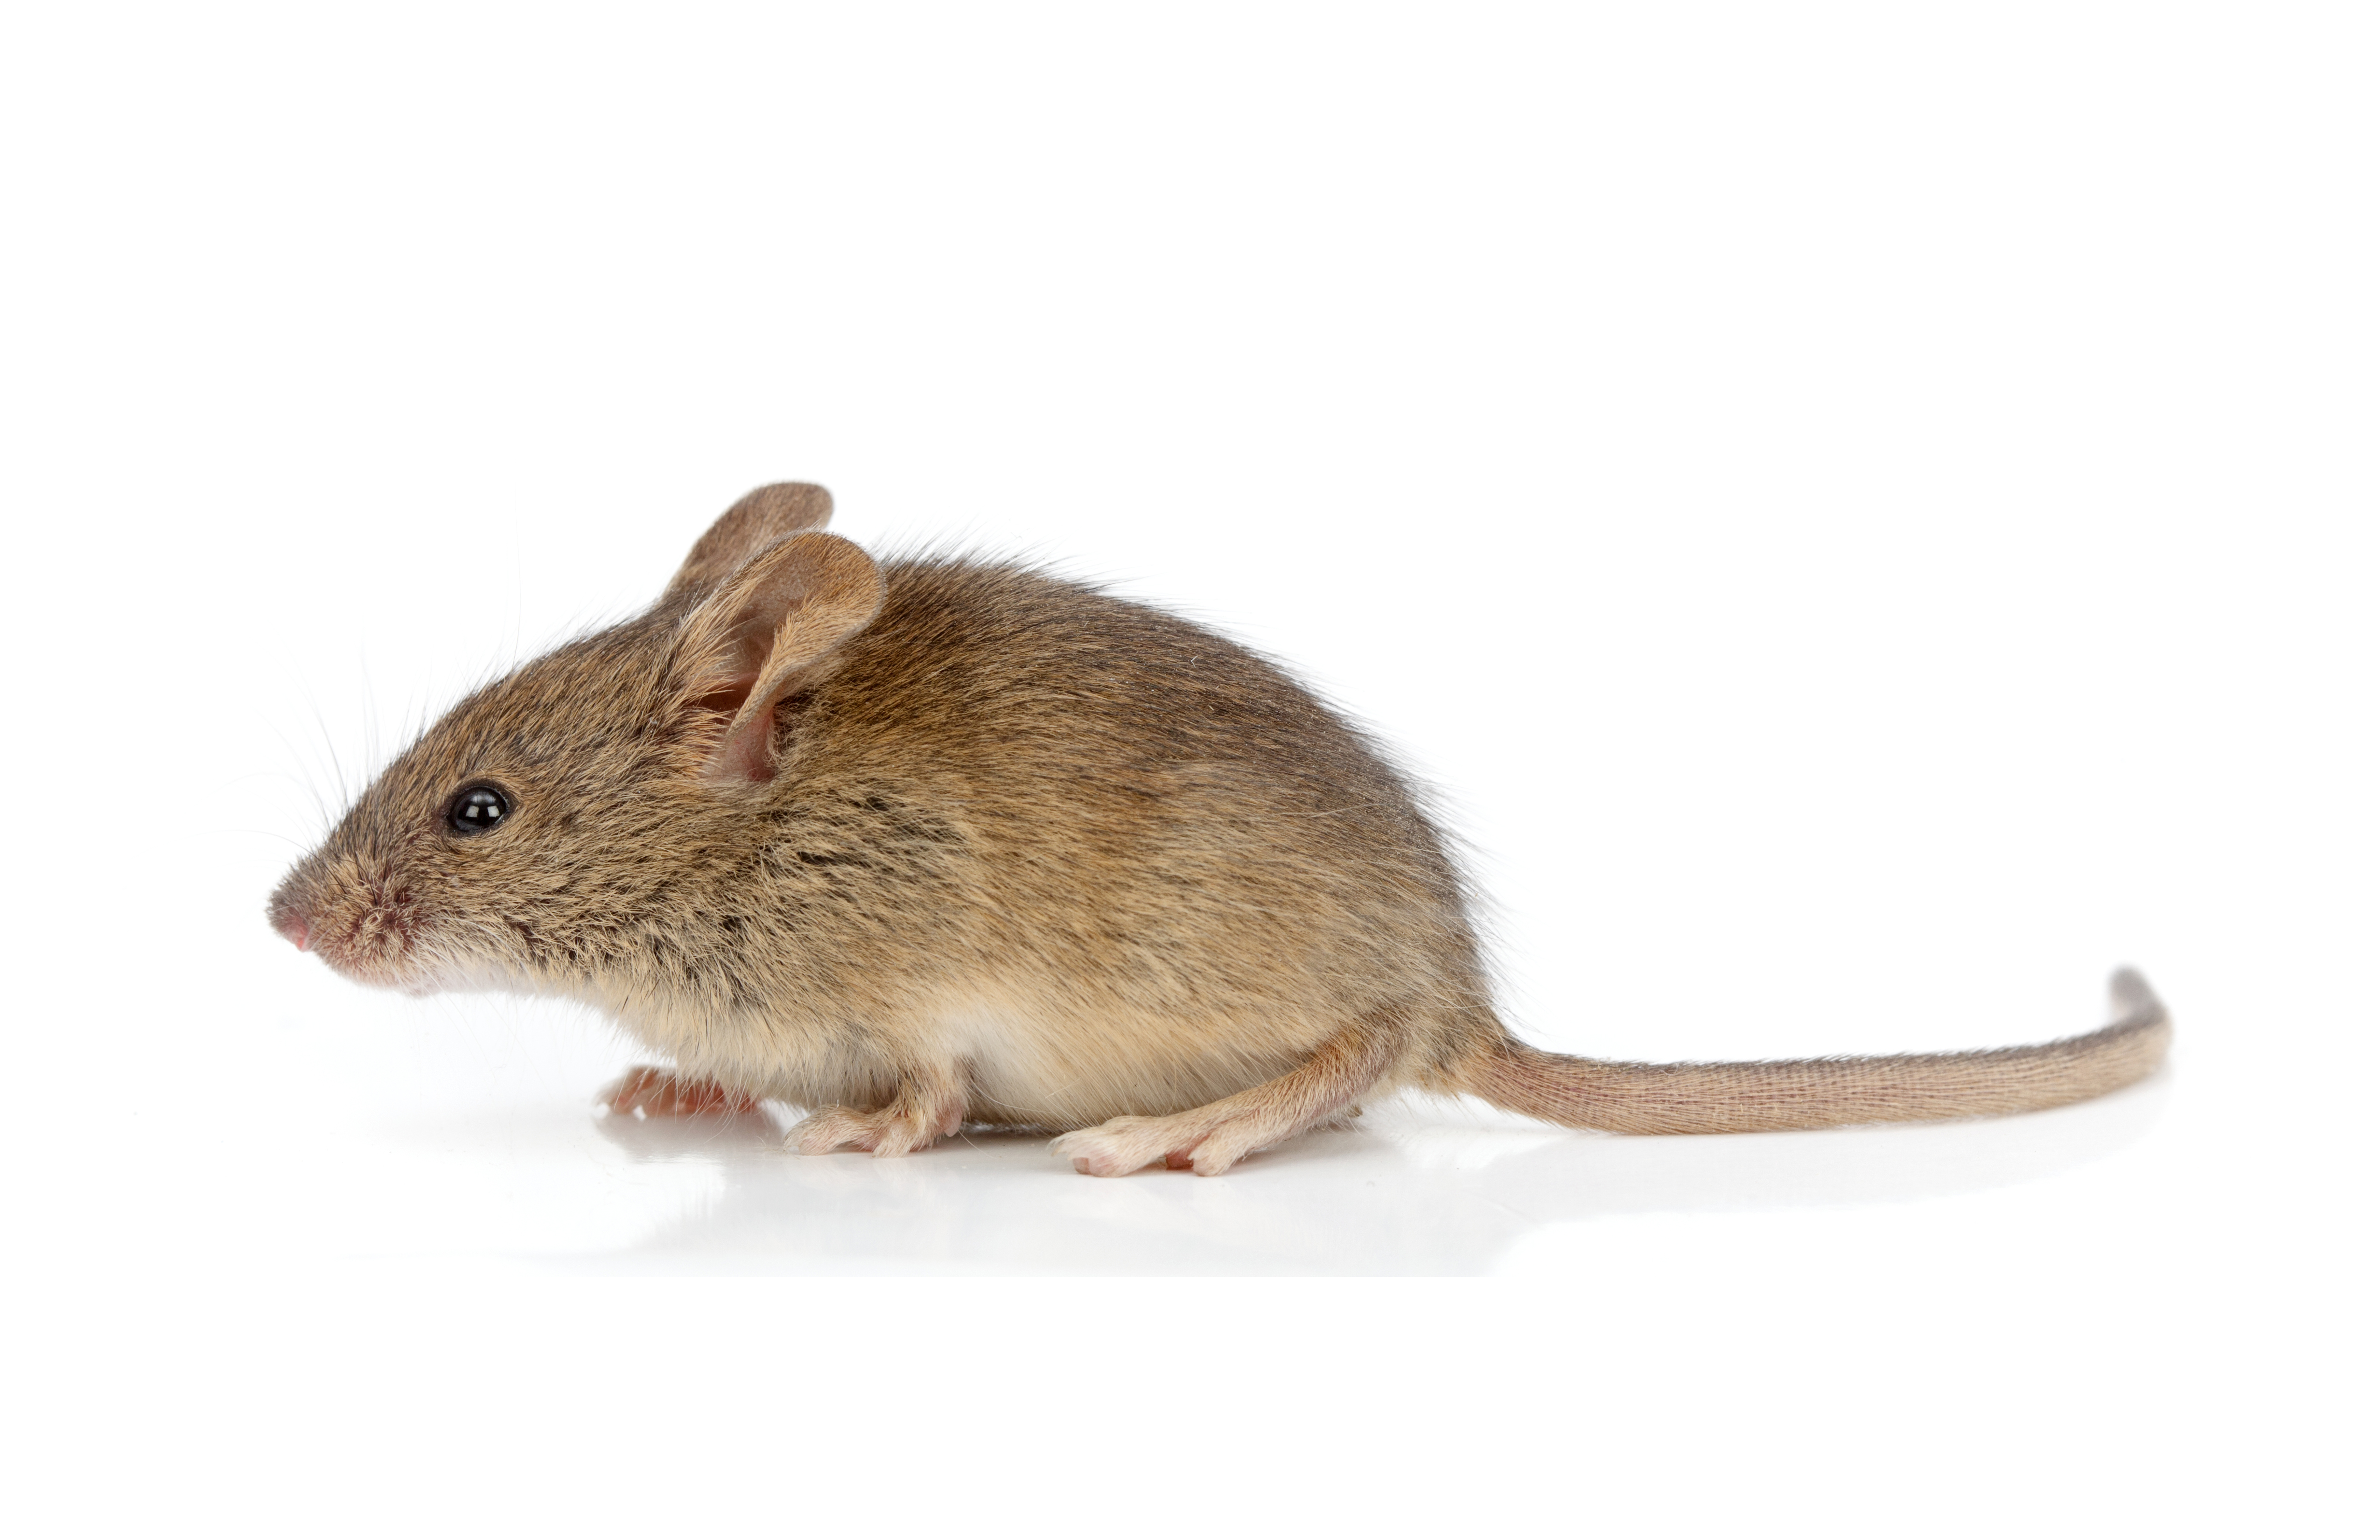 House Mouse, Mice, Removal, Exterminate, Poison, Thunder Bay, Ontario